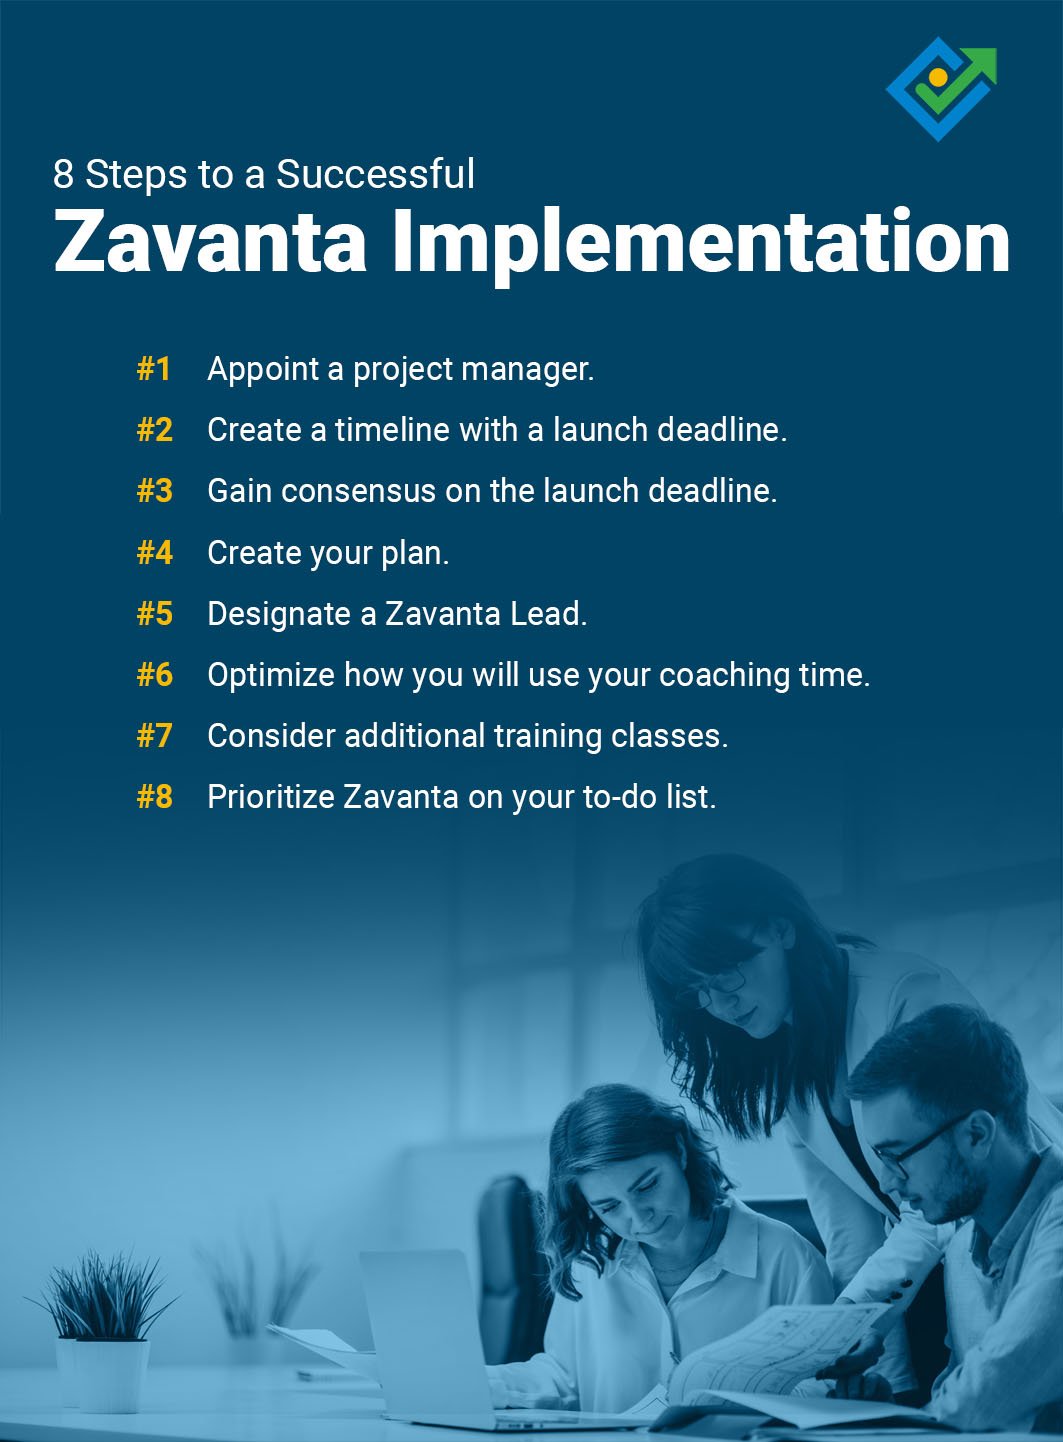 8 Steps to a Successful Zavanta Implementation - Comprose